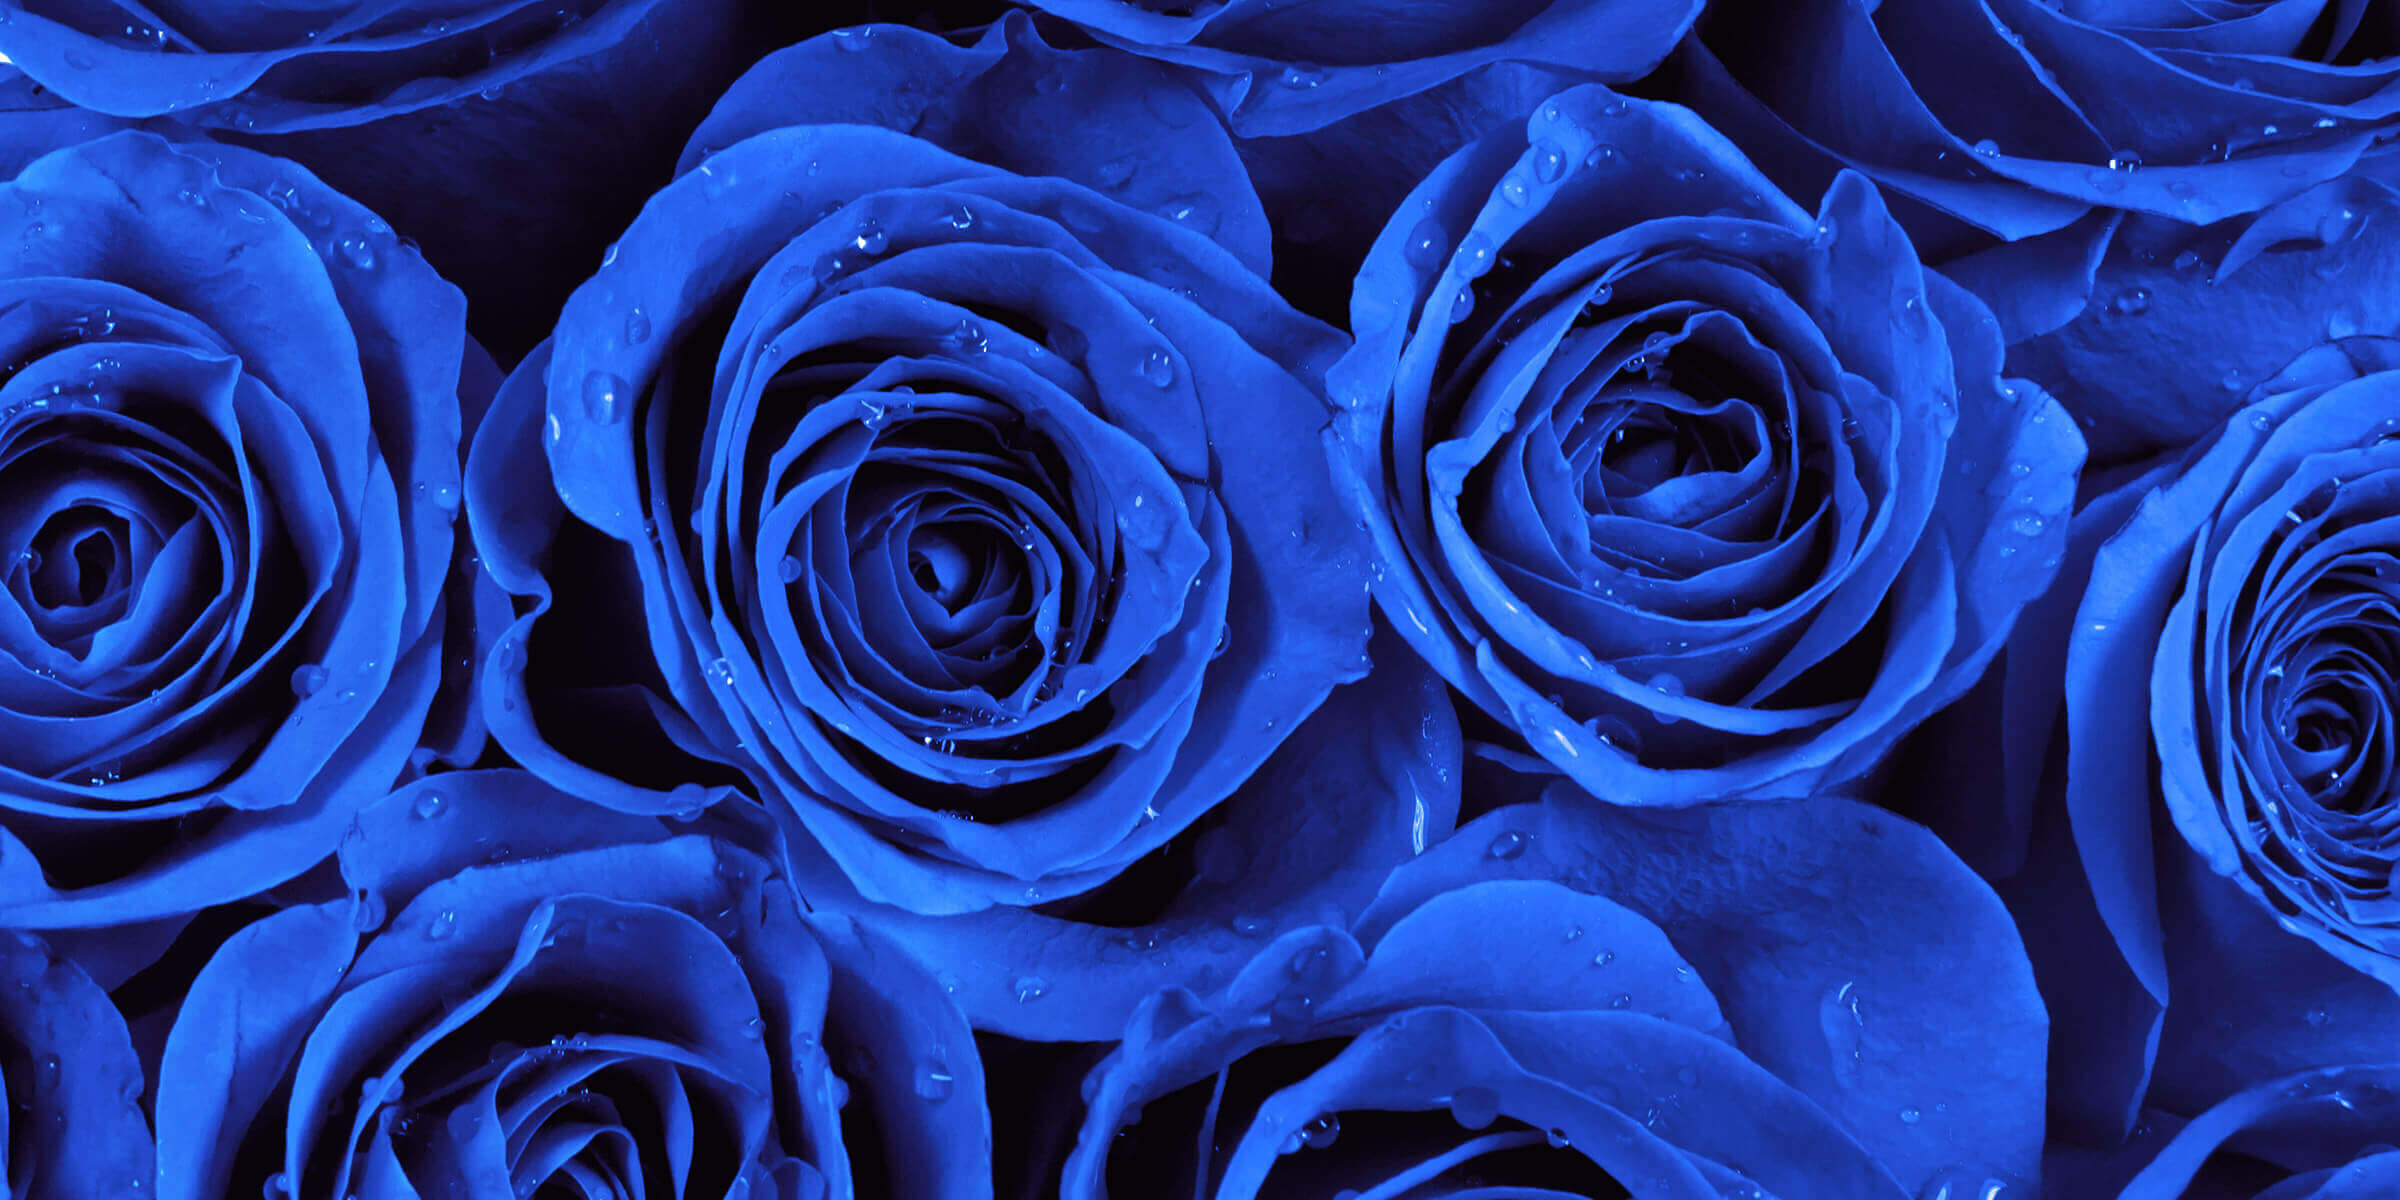 Elaines blue rose inspired engagment ring